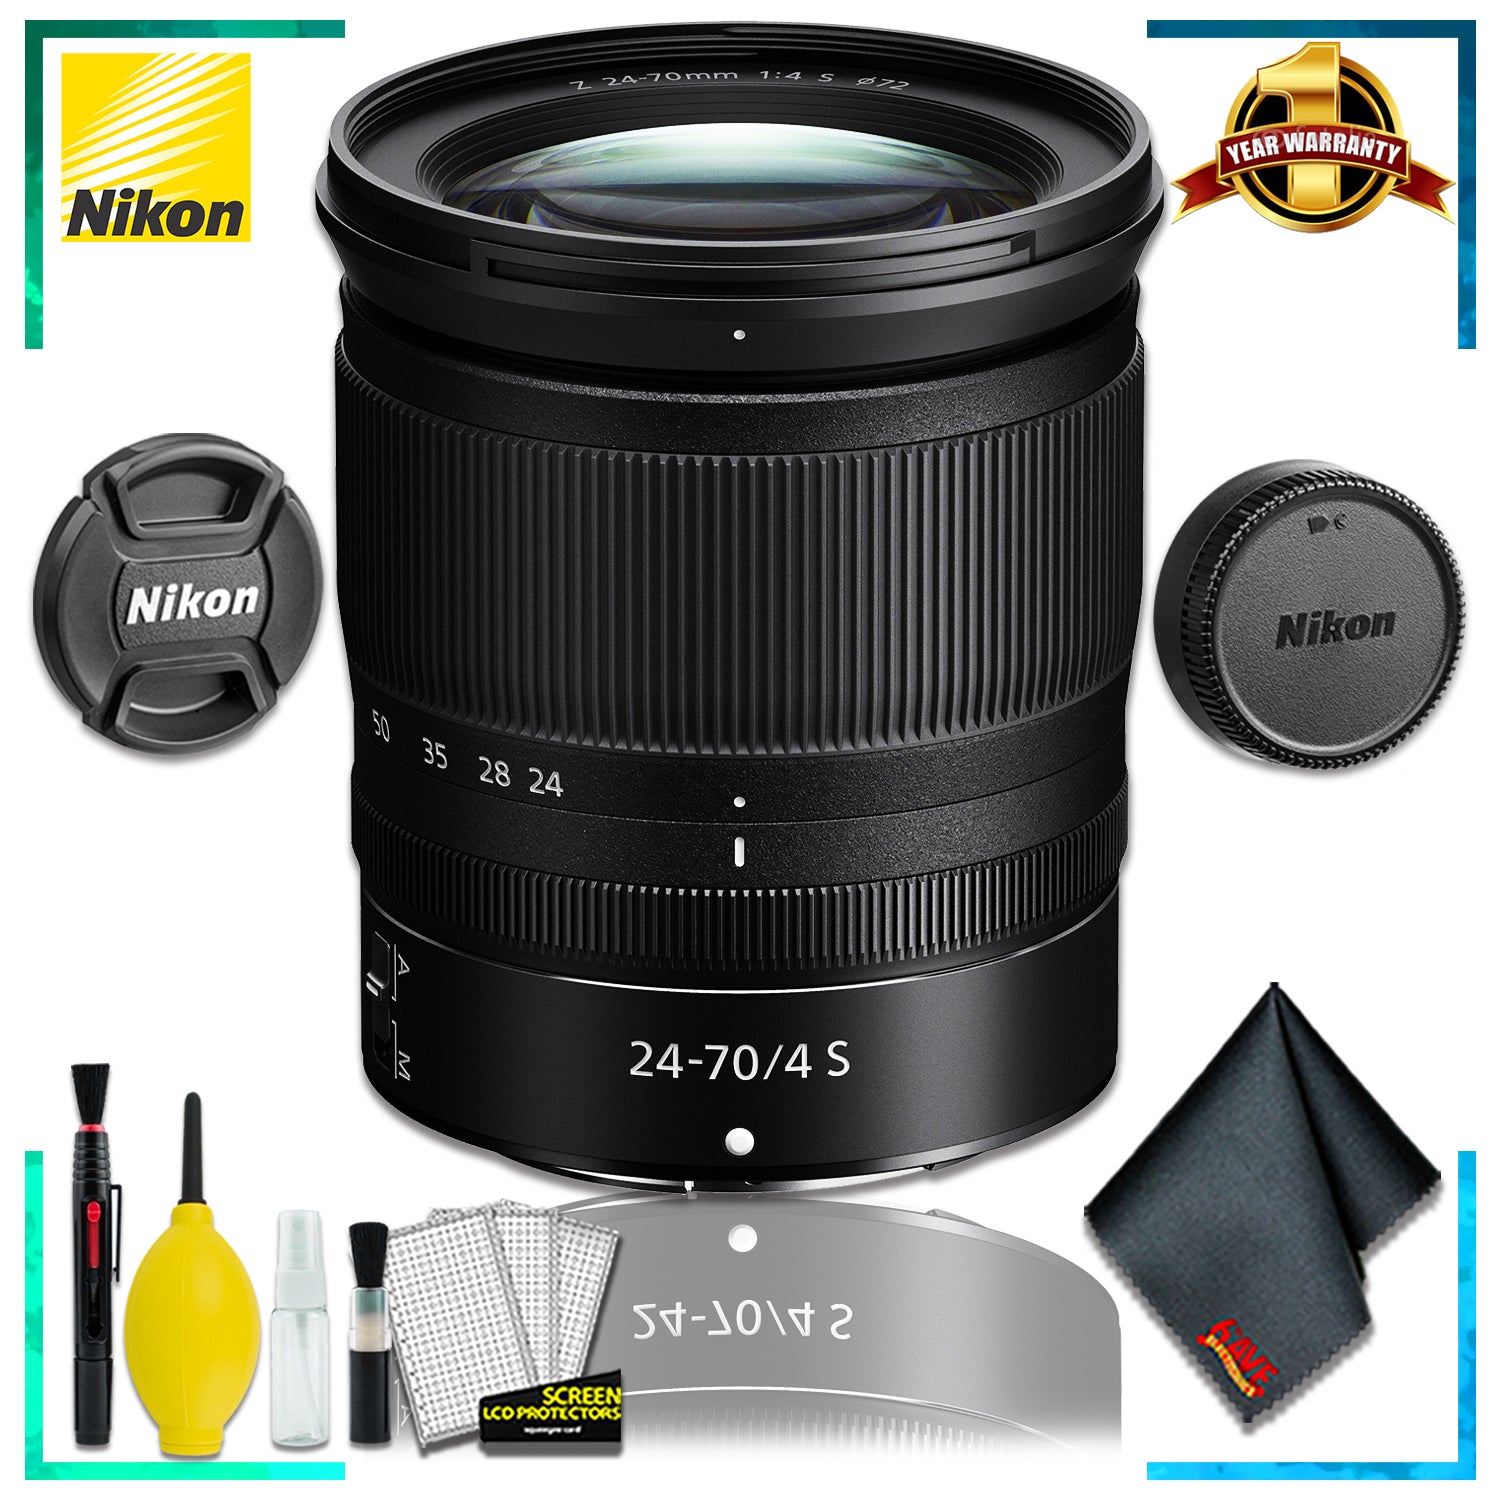 Nikon NIKKOR Z 24-70mm f.4 S Lens (Intl Model) + Cleaning Kit